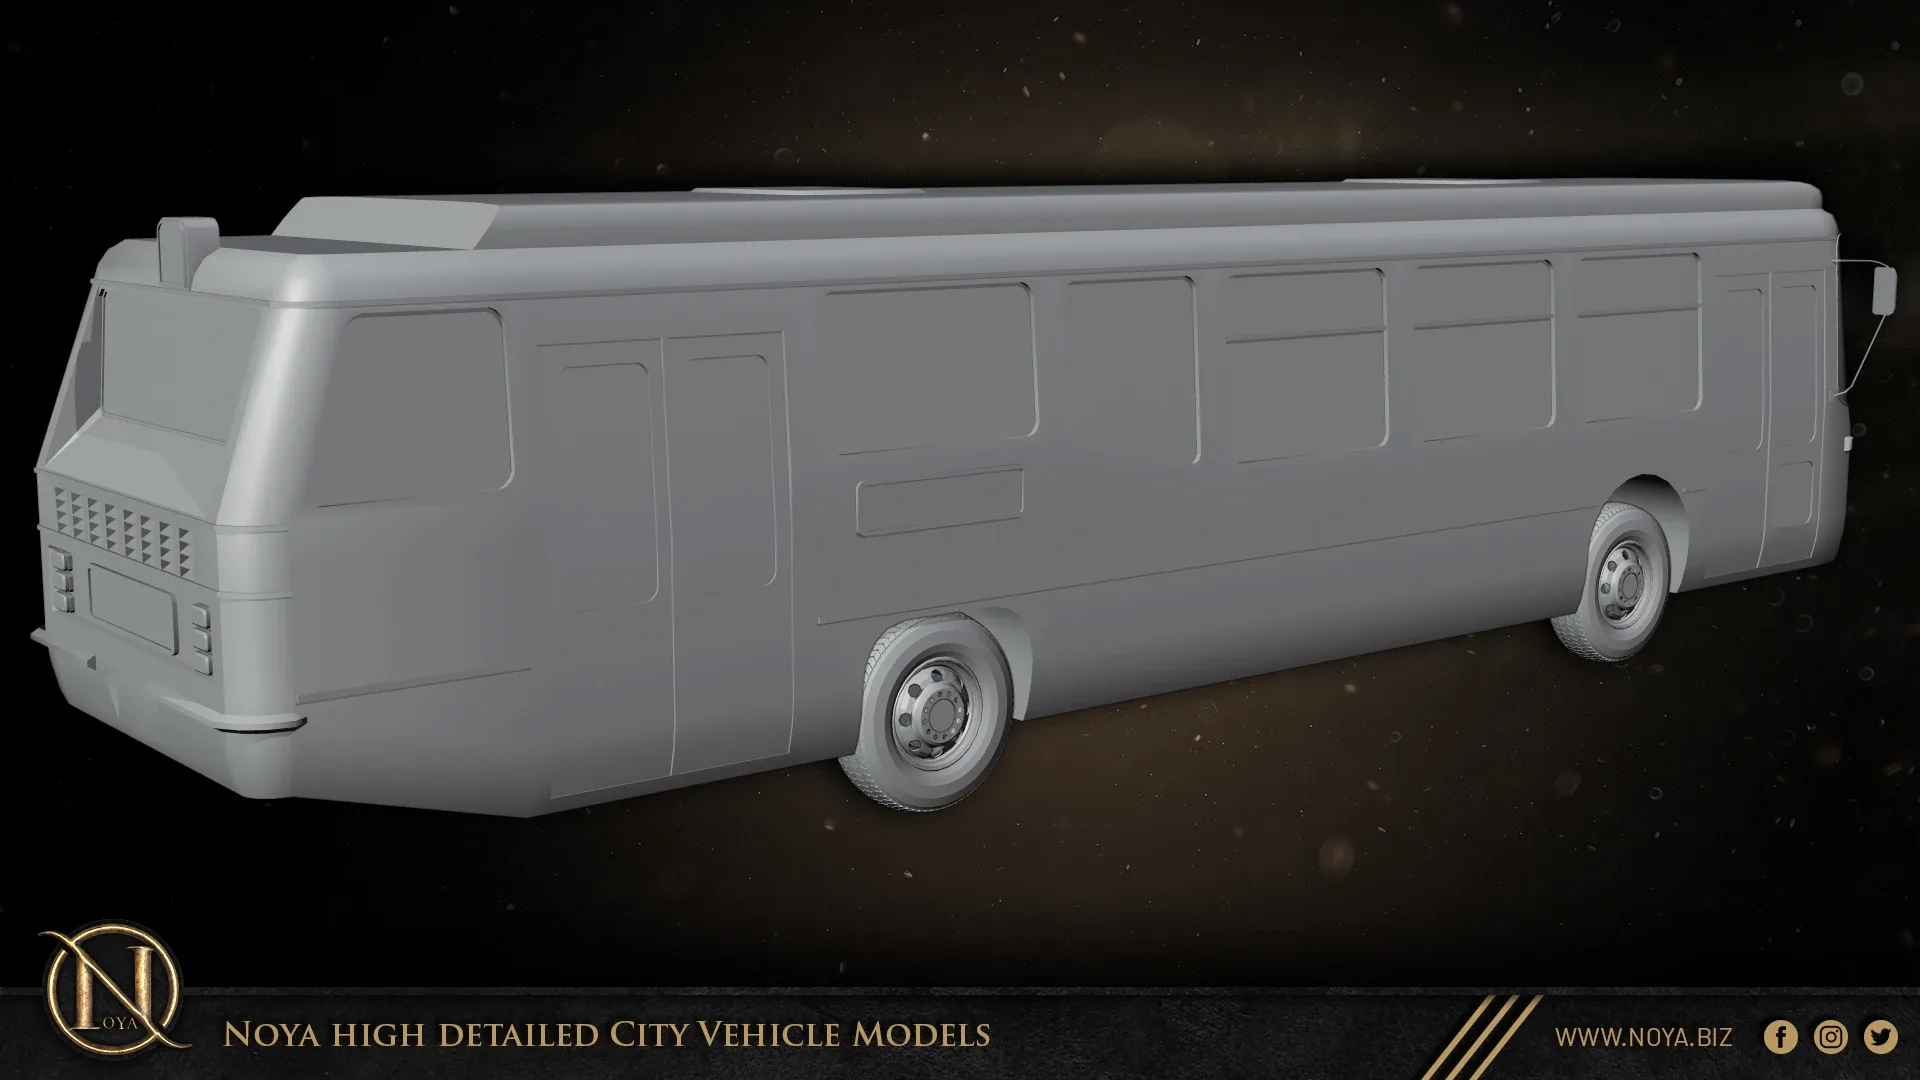 Noya High Detailed City Vehicle Models